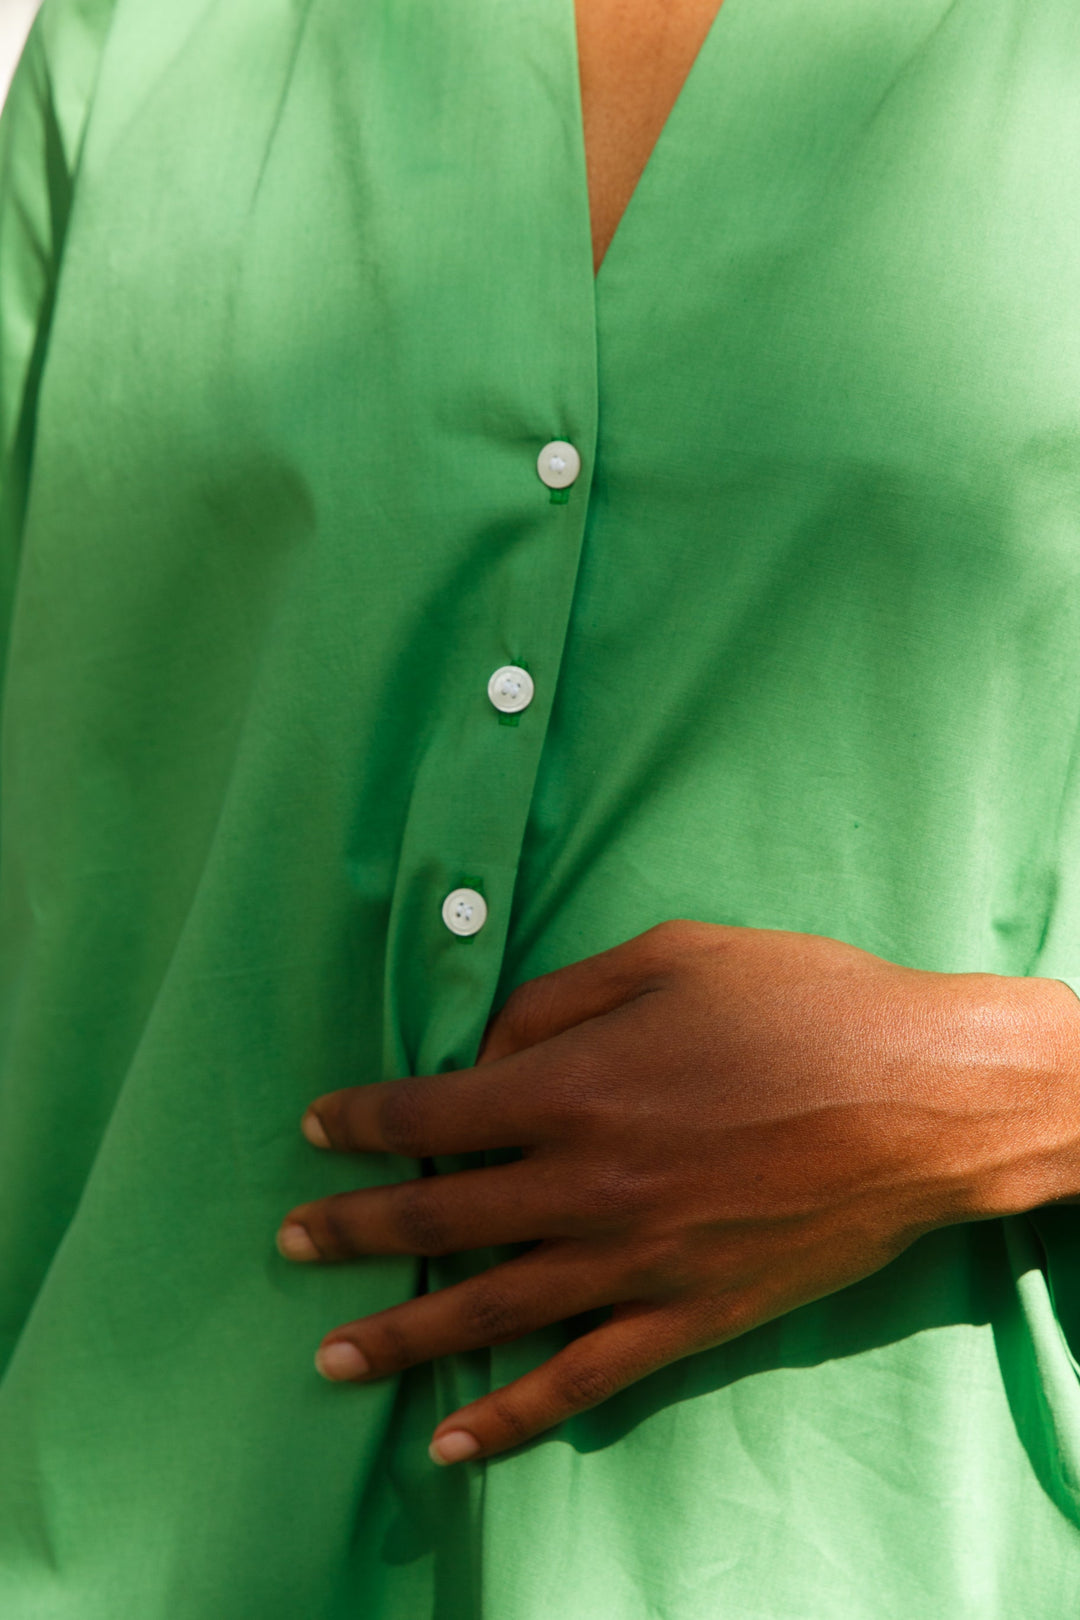 Robe matière upcyclée - Bibi - vert - fairytale